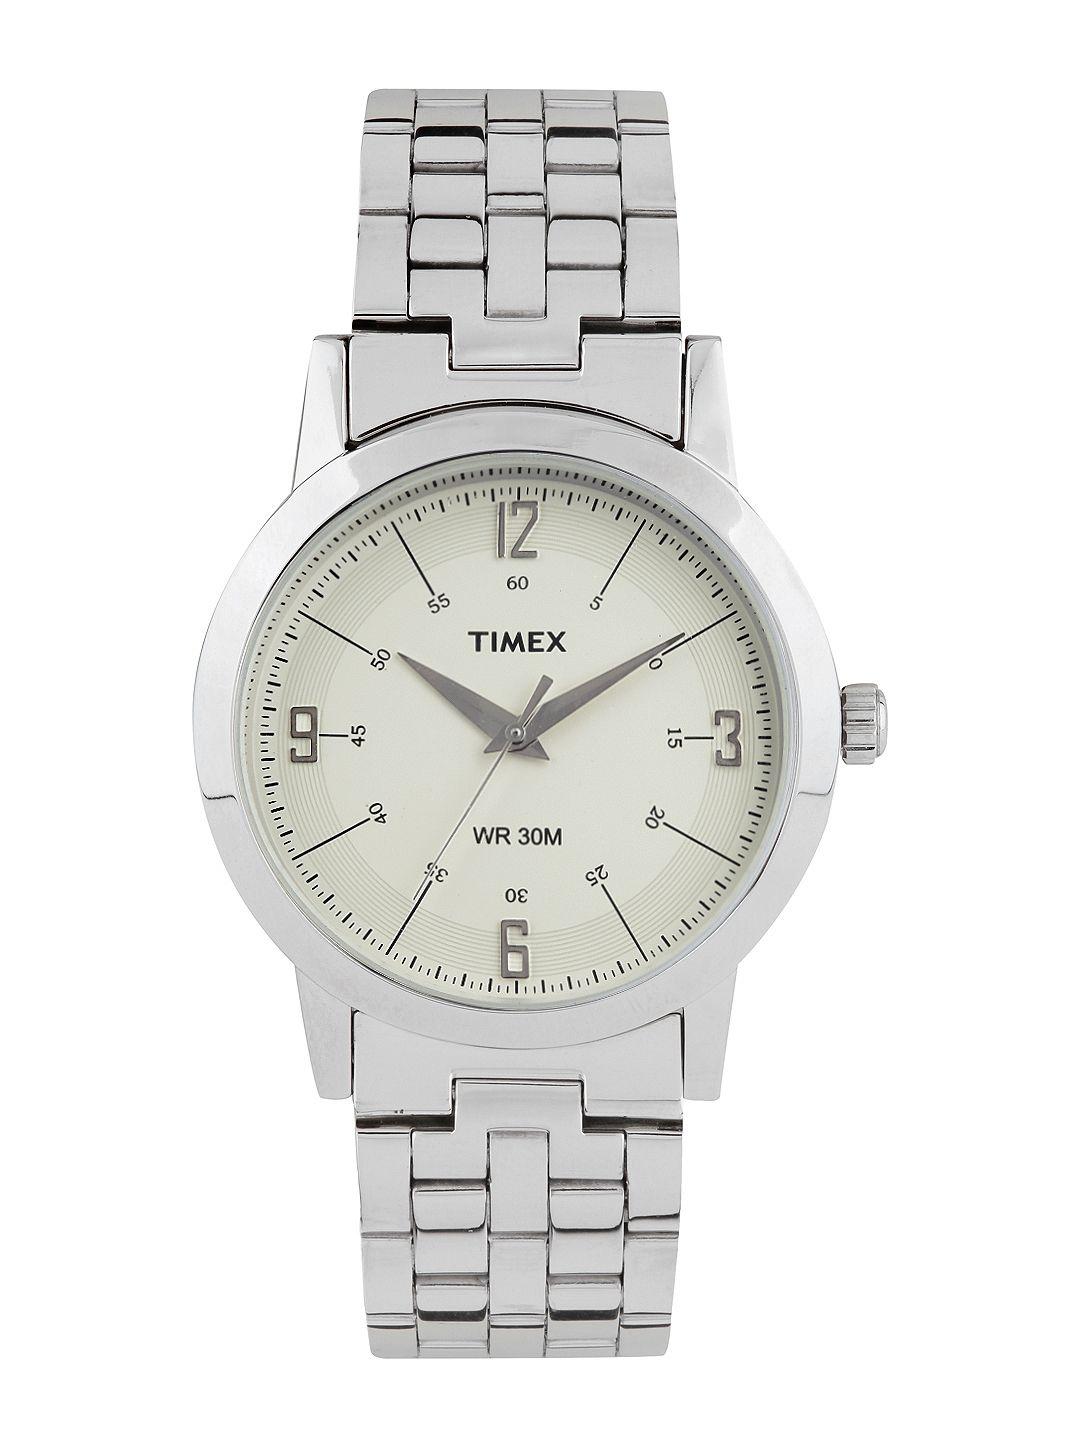 timex men off-white dial watch ti000t10500